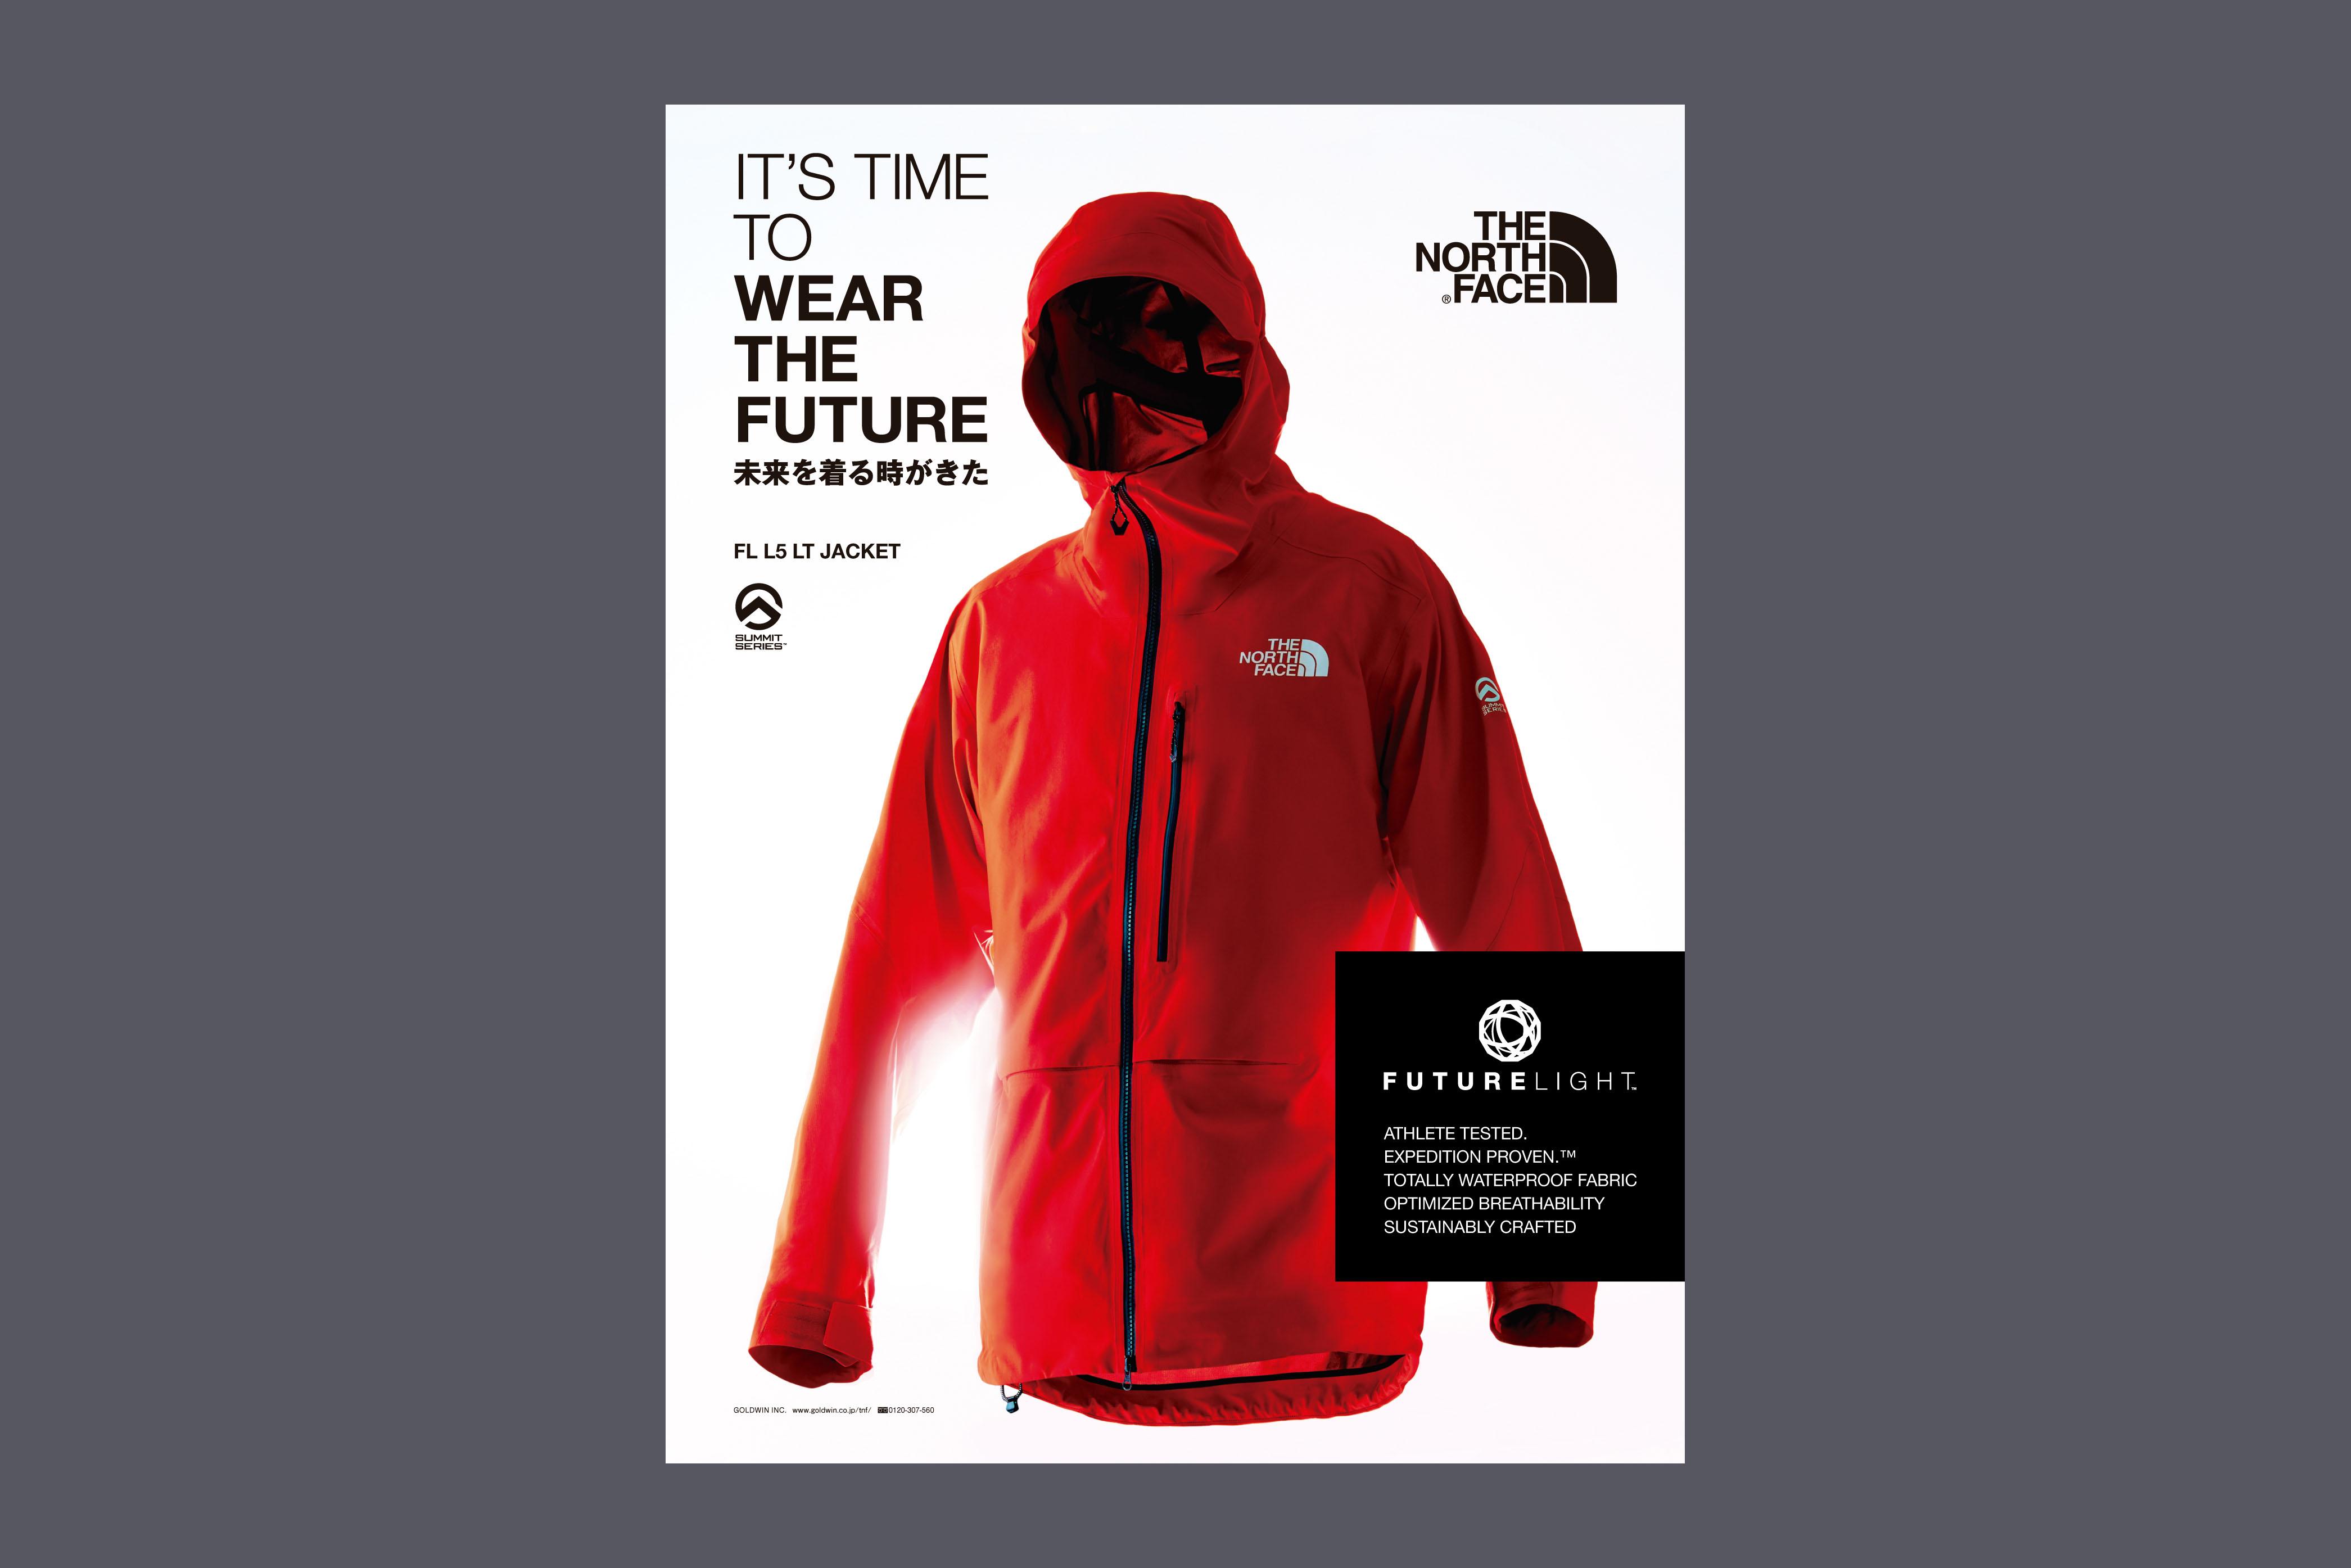 The North Face: Futuelight™—FL L5 LT Jacket (Advertisement, 2019